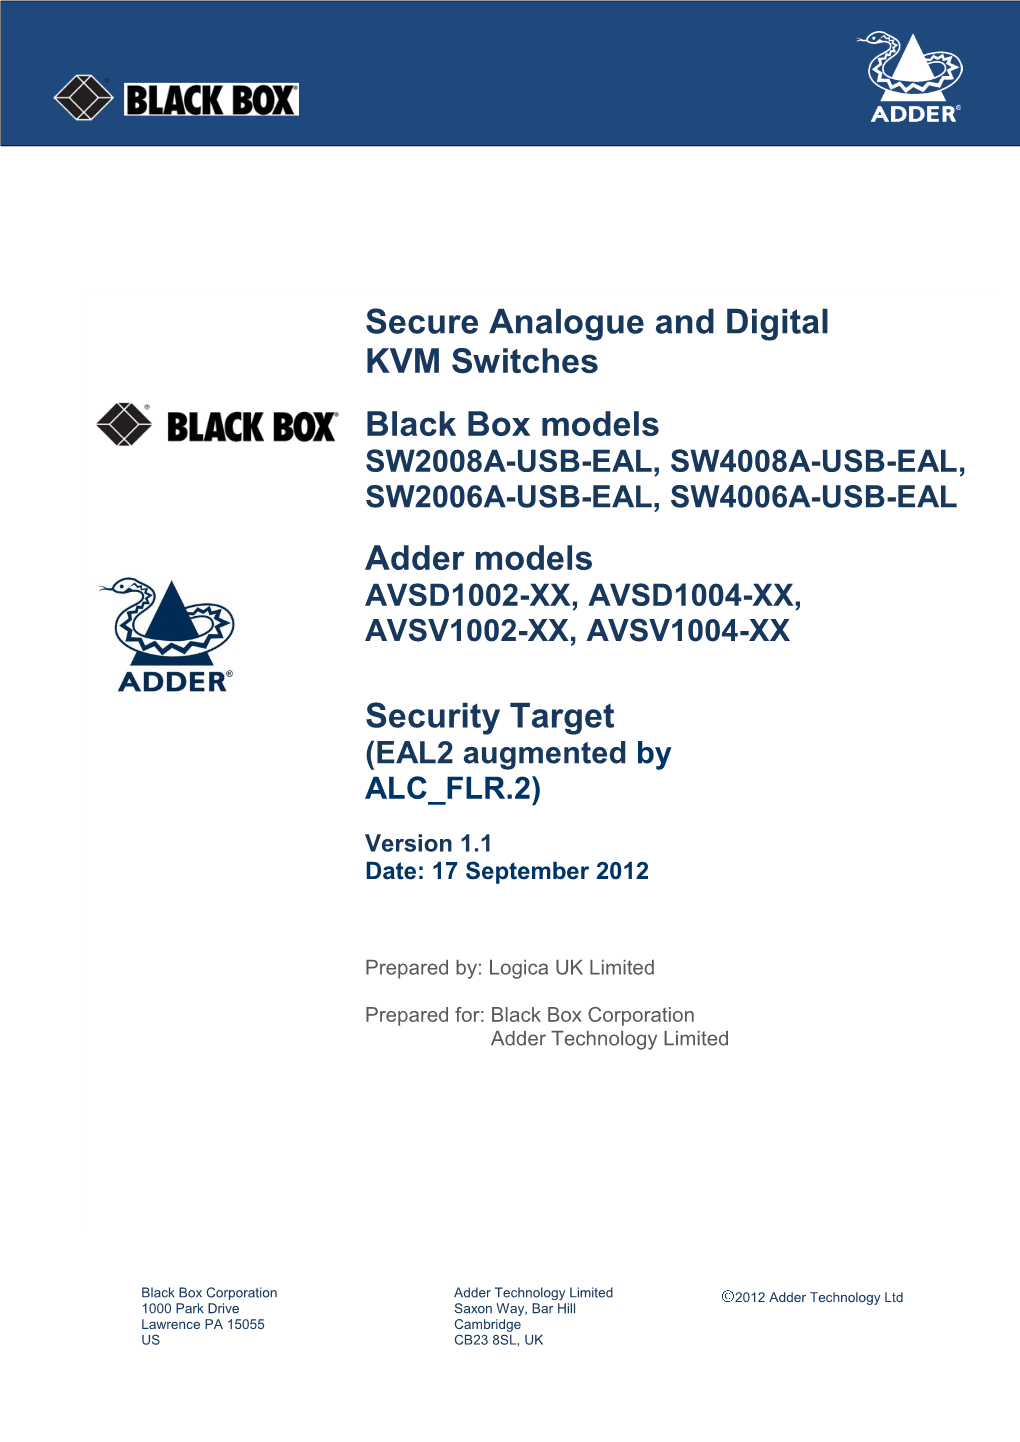 Secure Analogue and Digital KVM Switches Black Box Models Adder Models Security Target